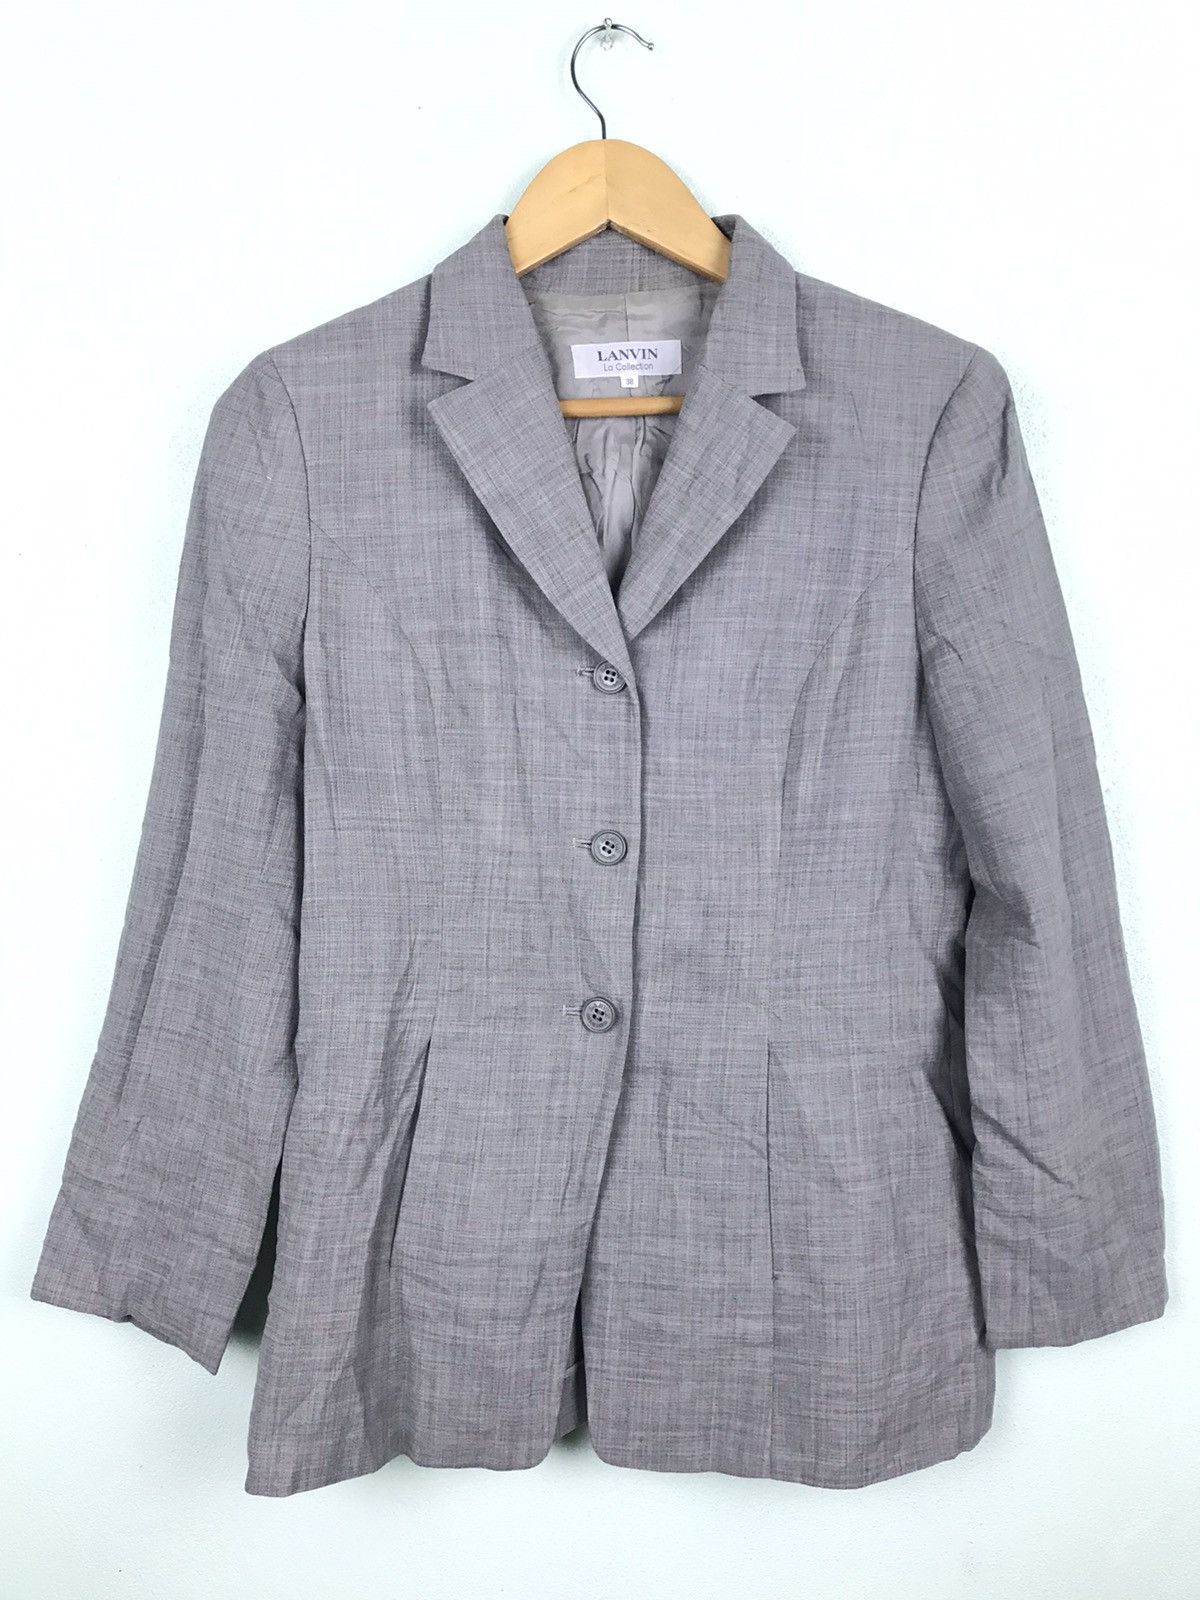 Lanvin la collection wool blazers jacket - gh1319 - 1